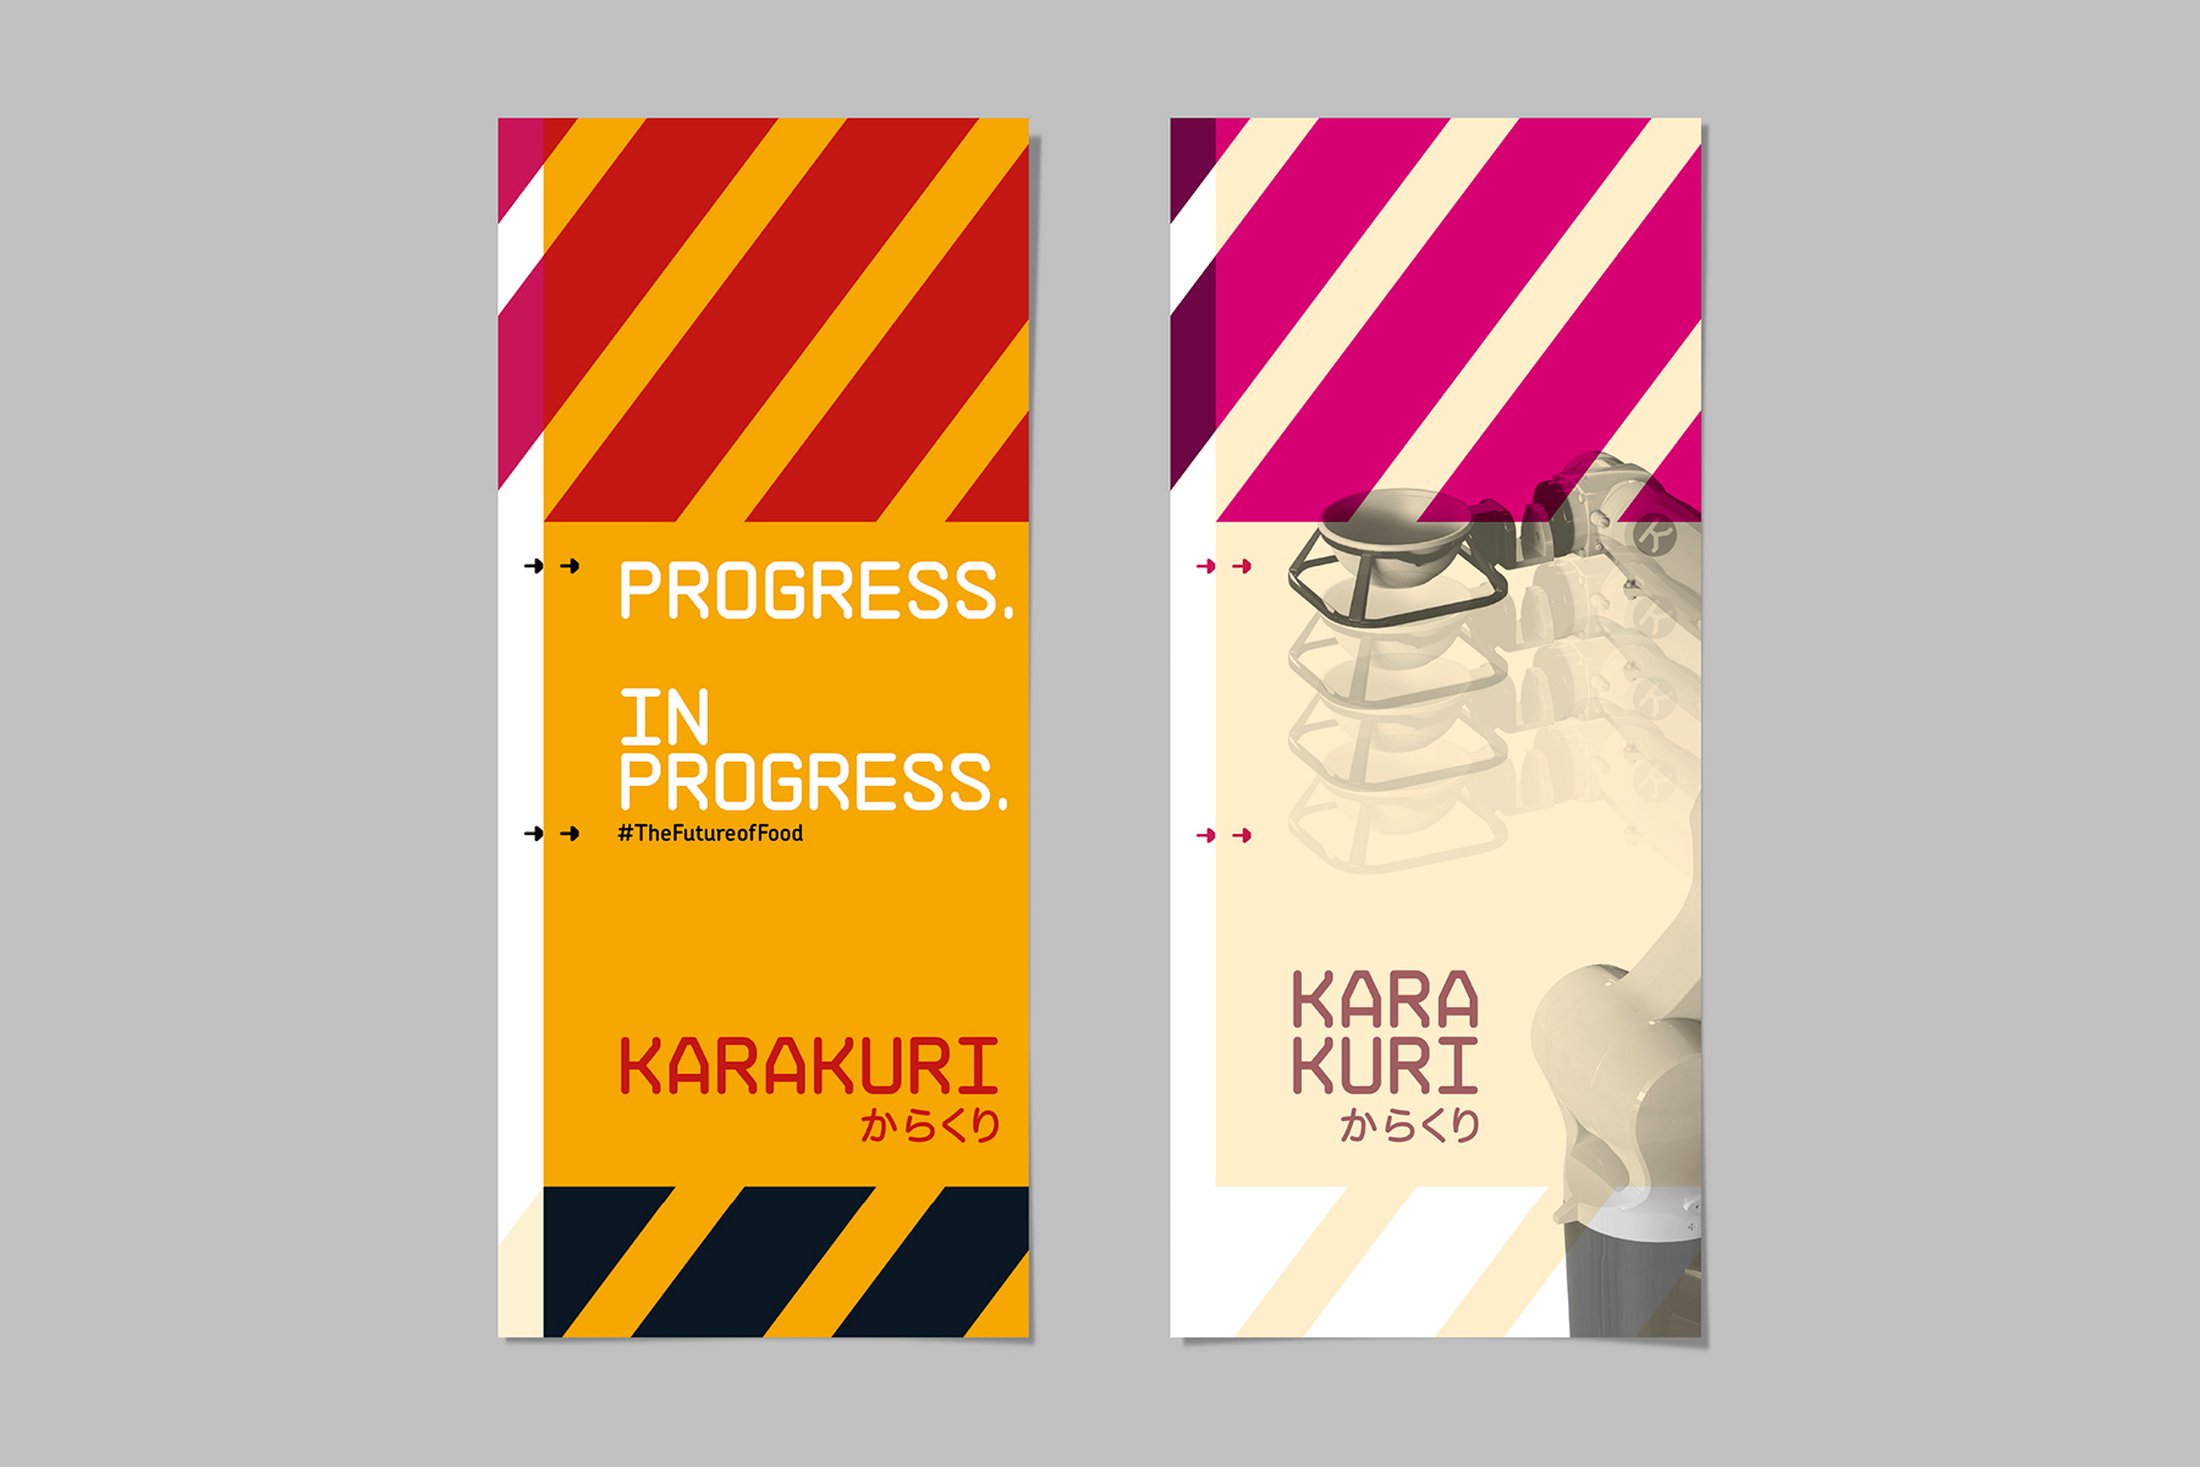 paul_belford_ltd_karakuri_posters_progress.jpg